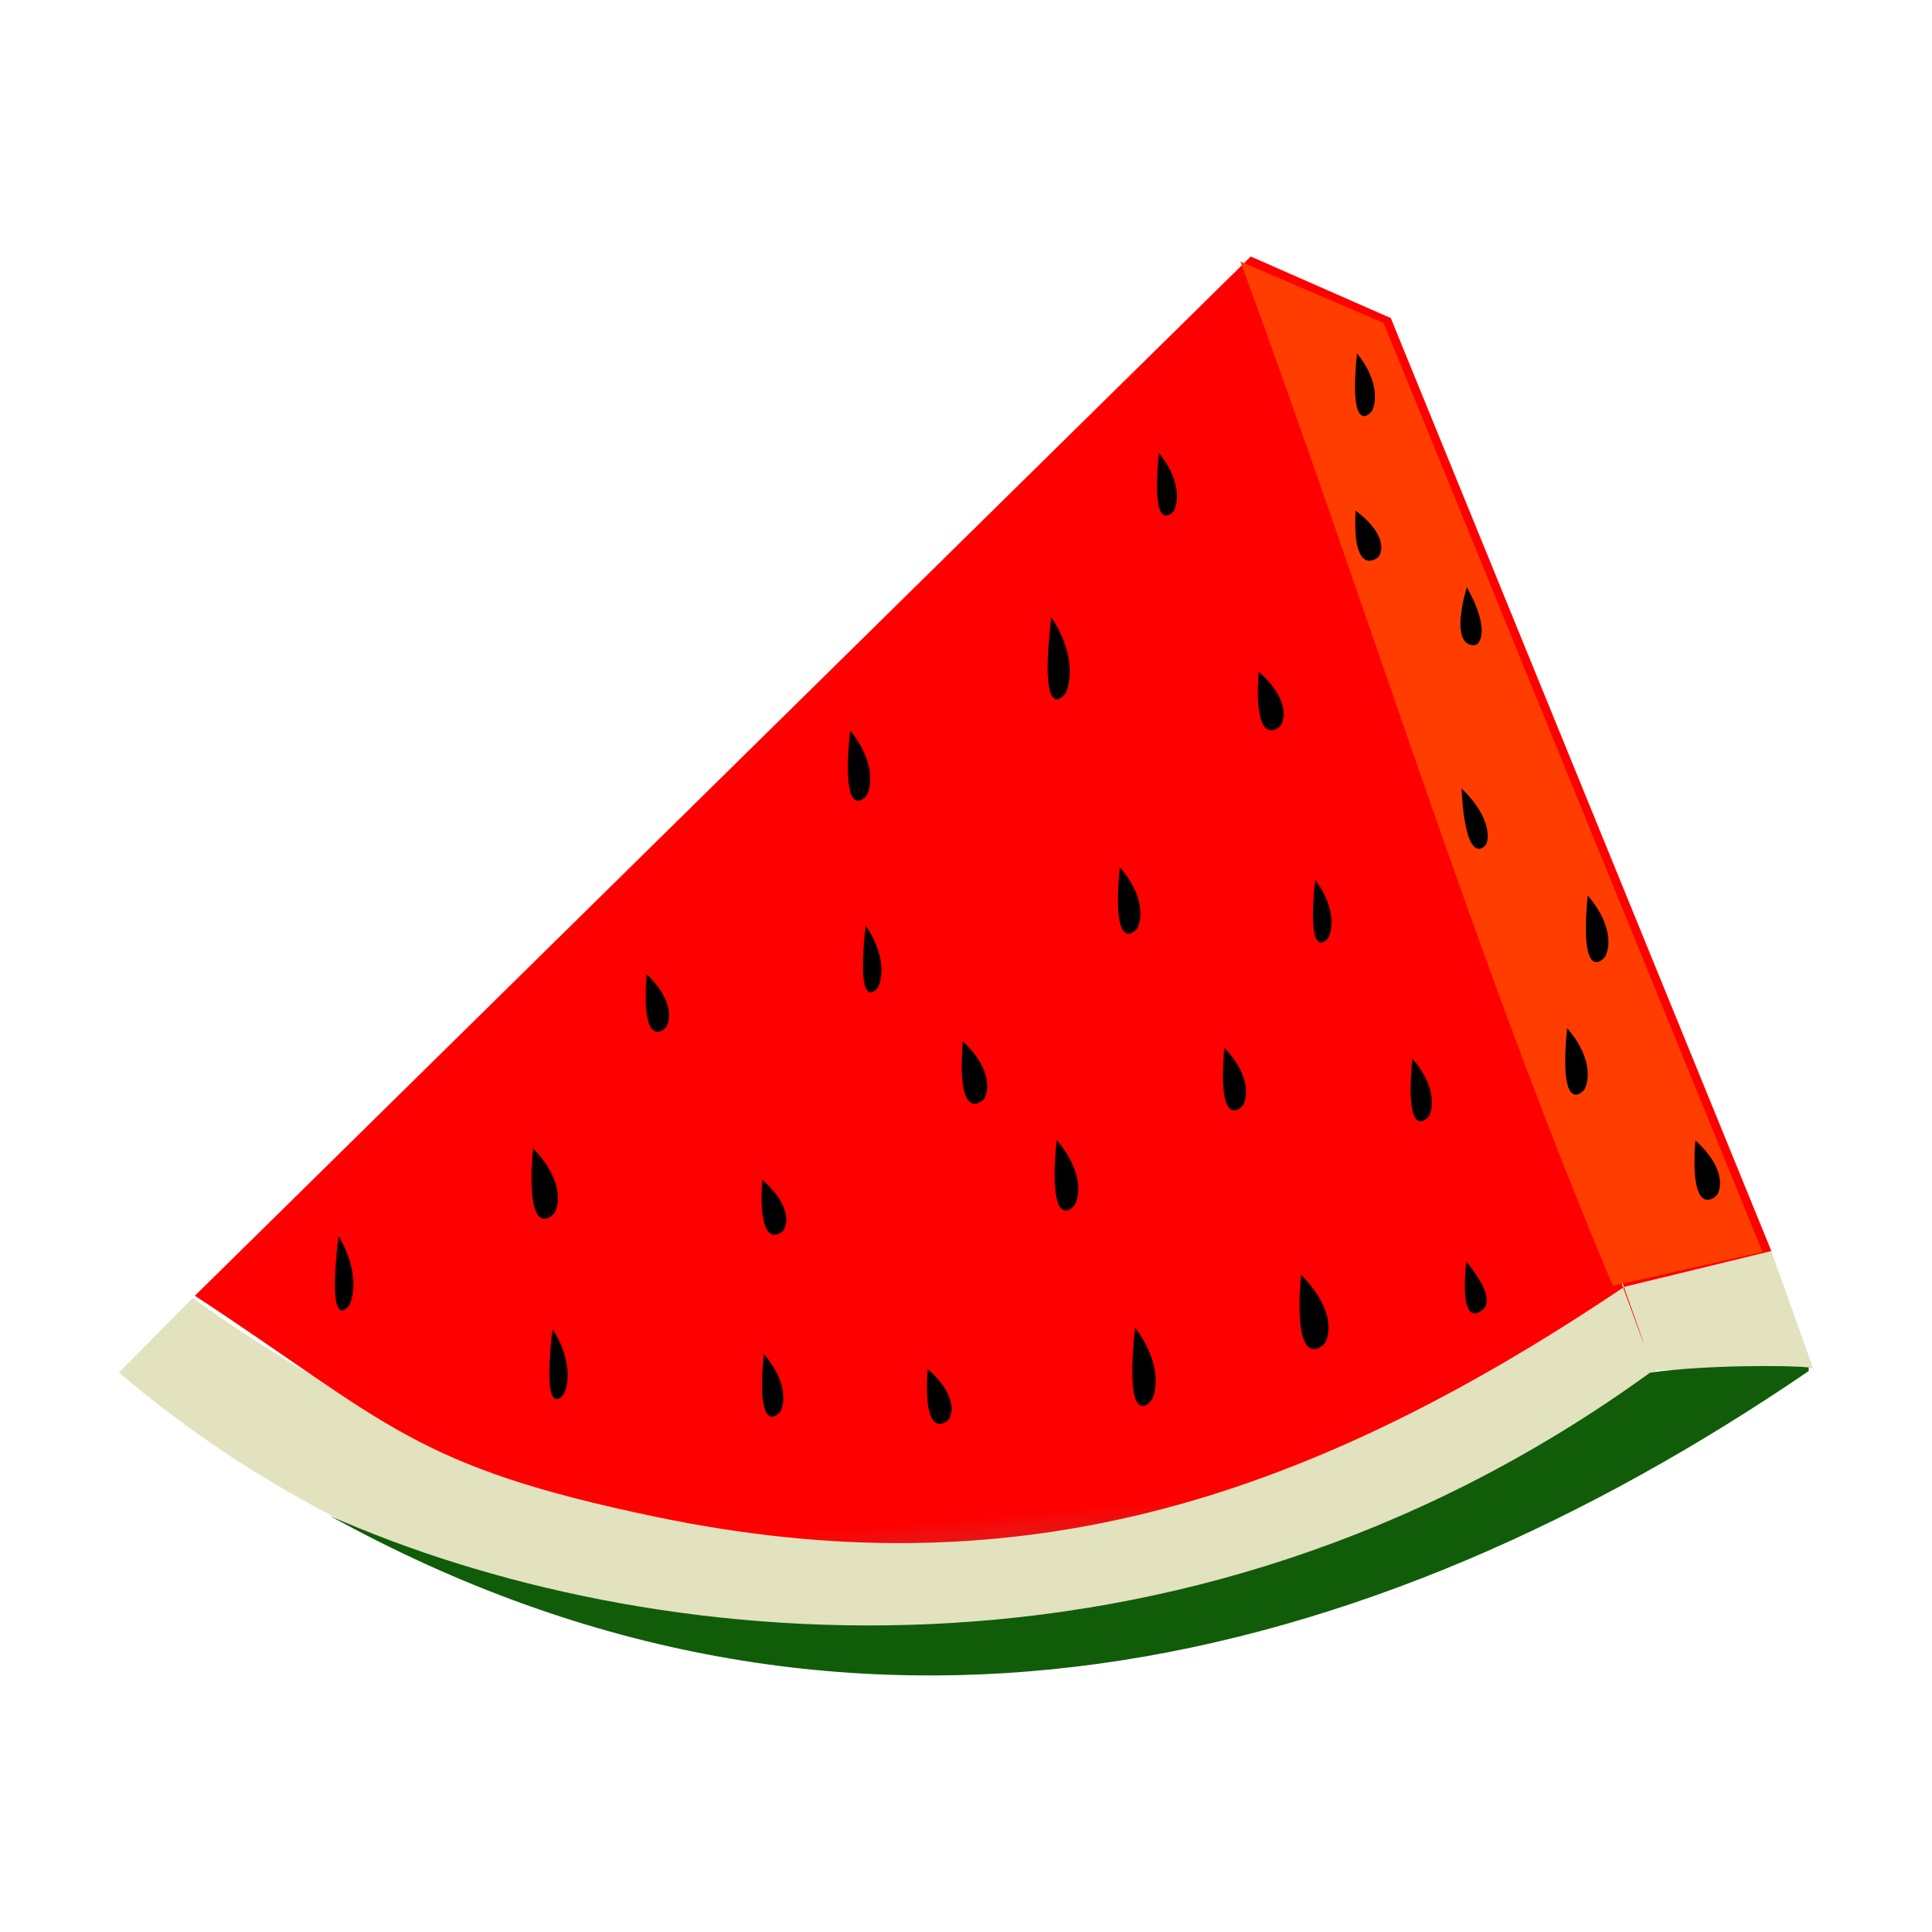 Watermelon vector clipart image